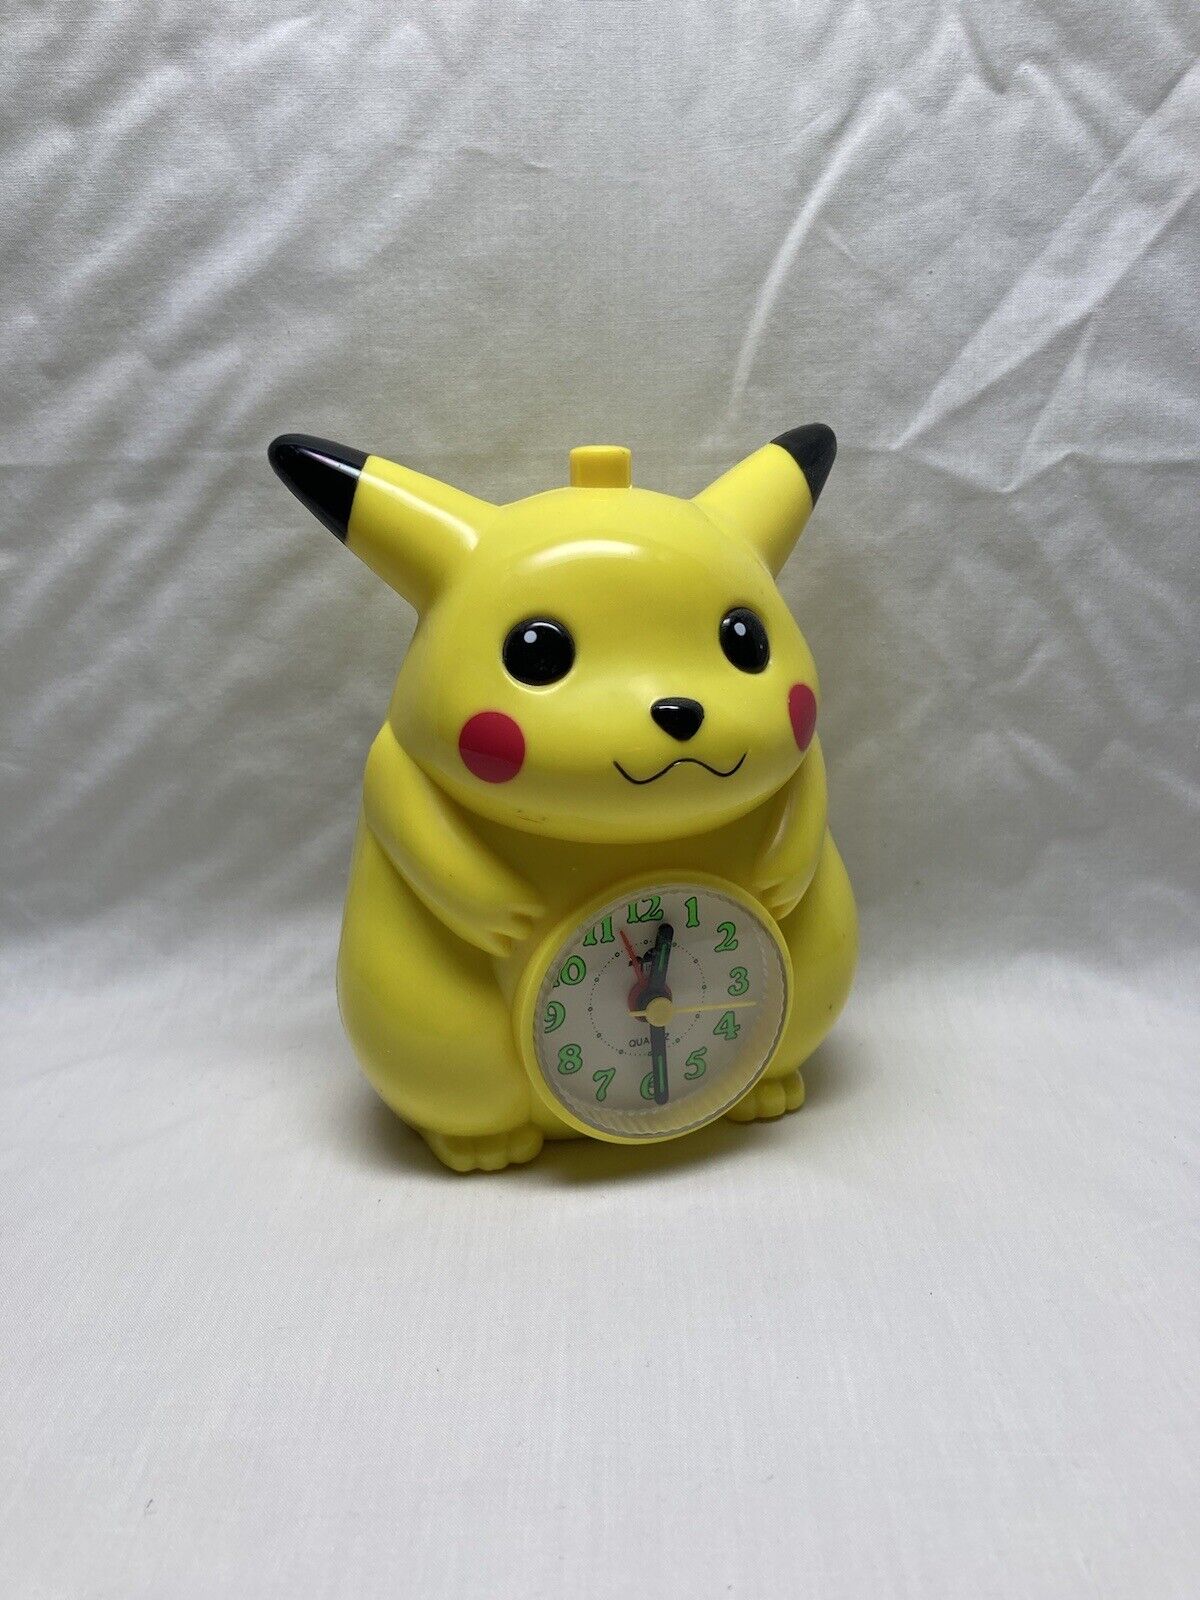 RARE 1990s Vintage Old Imess Pokemon Chubby Pikachu Alarm Clock